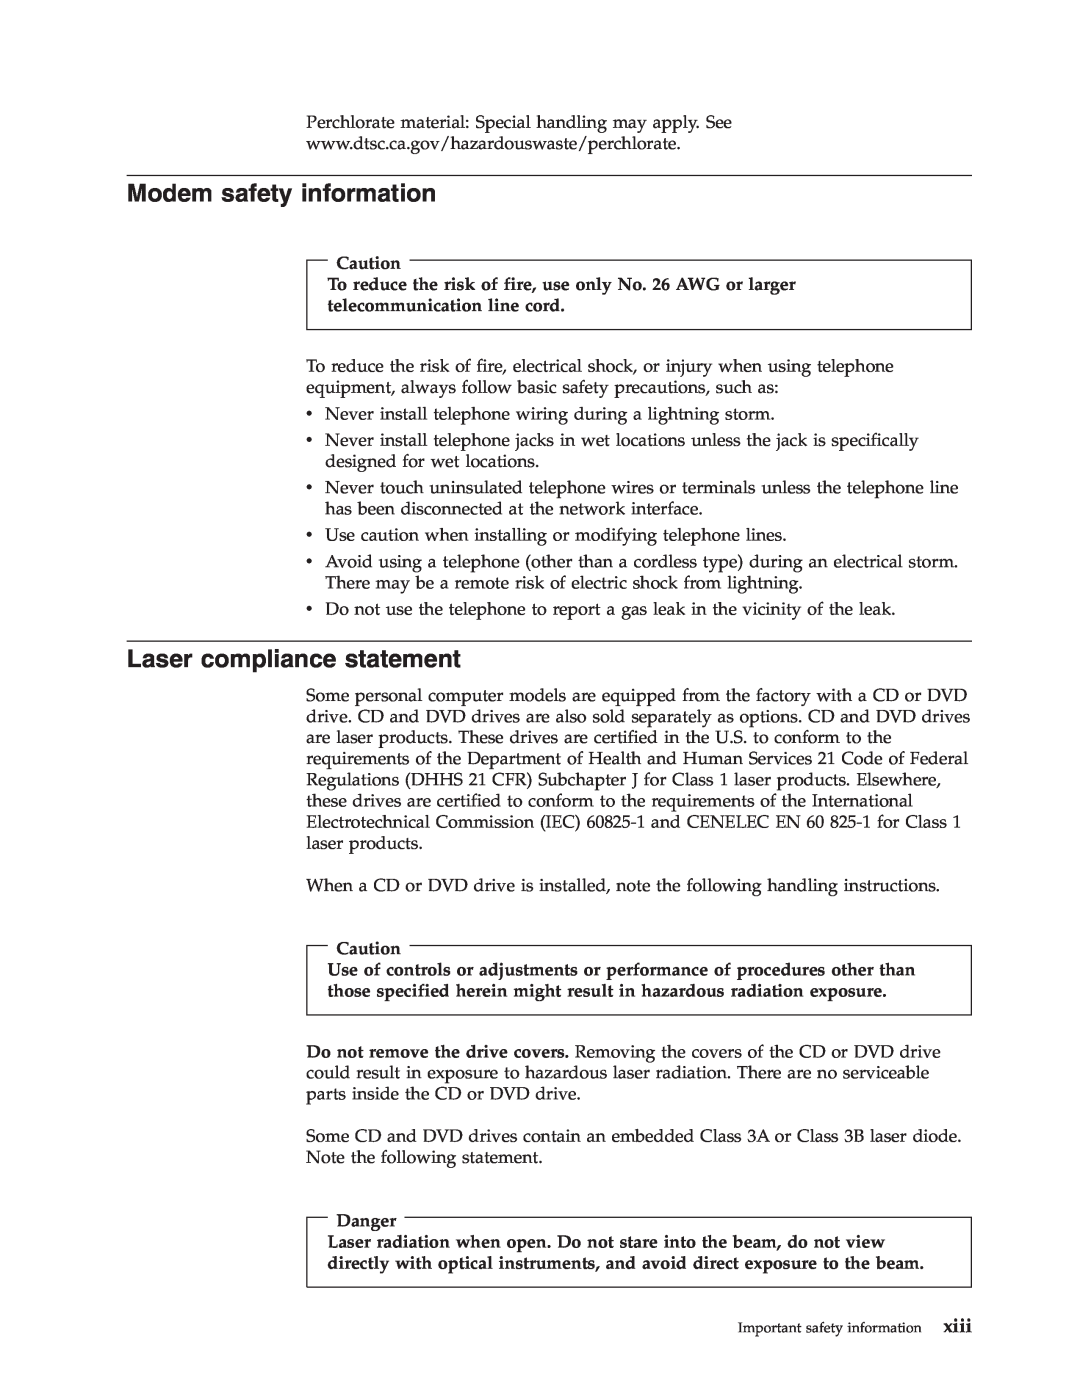 Lenovo 3000 J Series manual Modem safety information, Laser compliance statement 